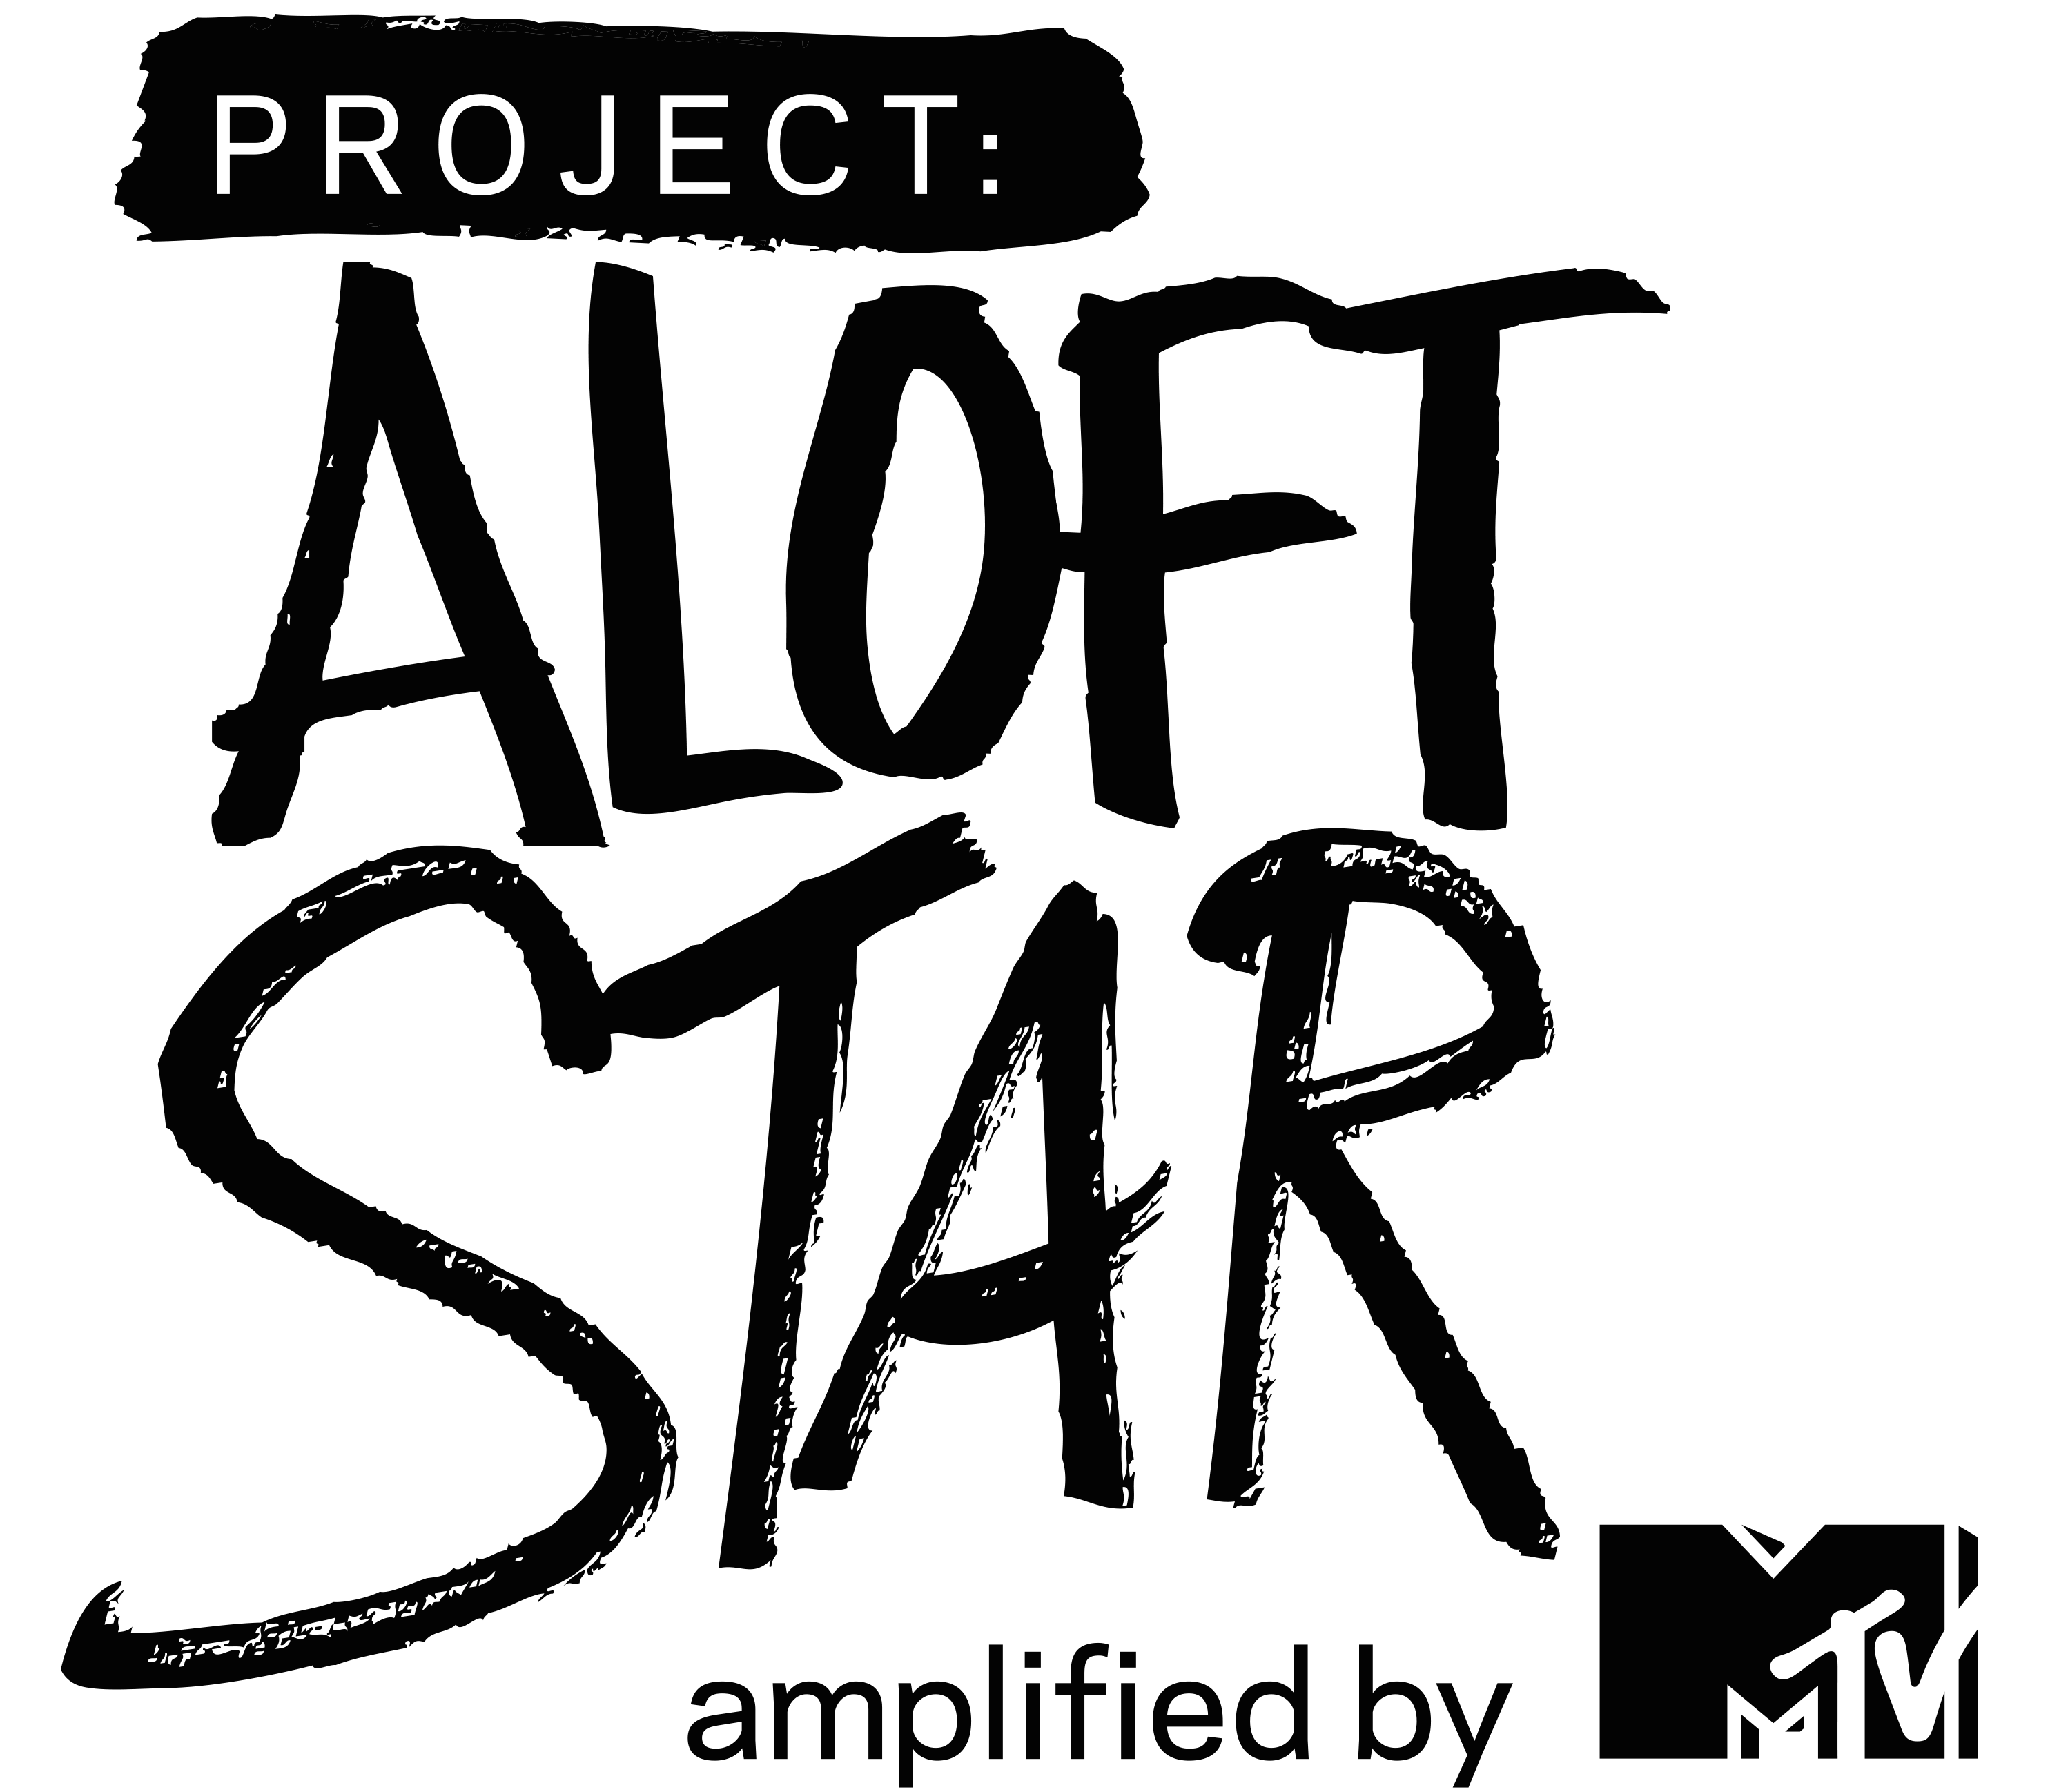 source: Project Aloft Star